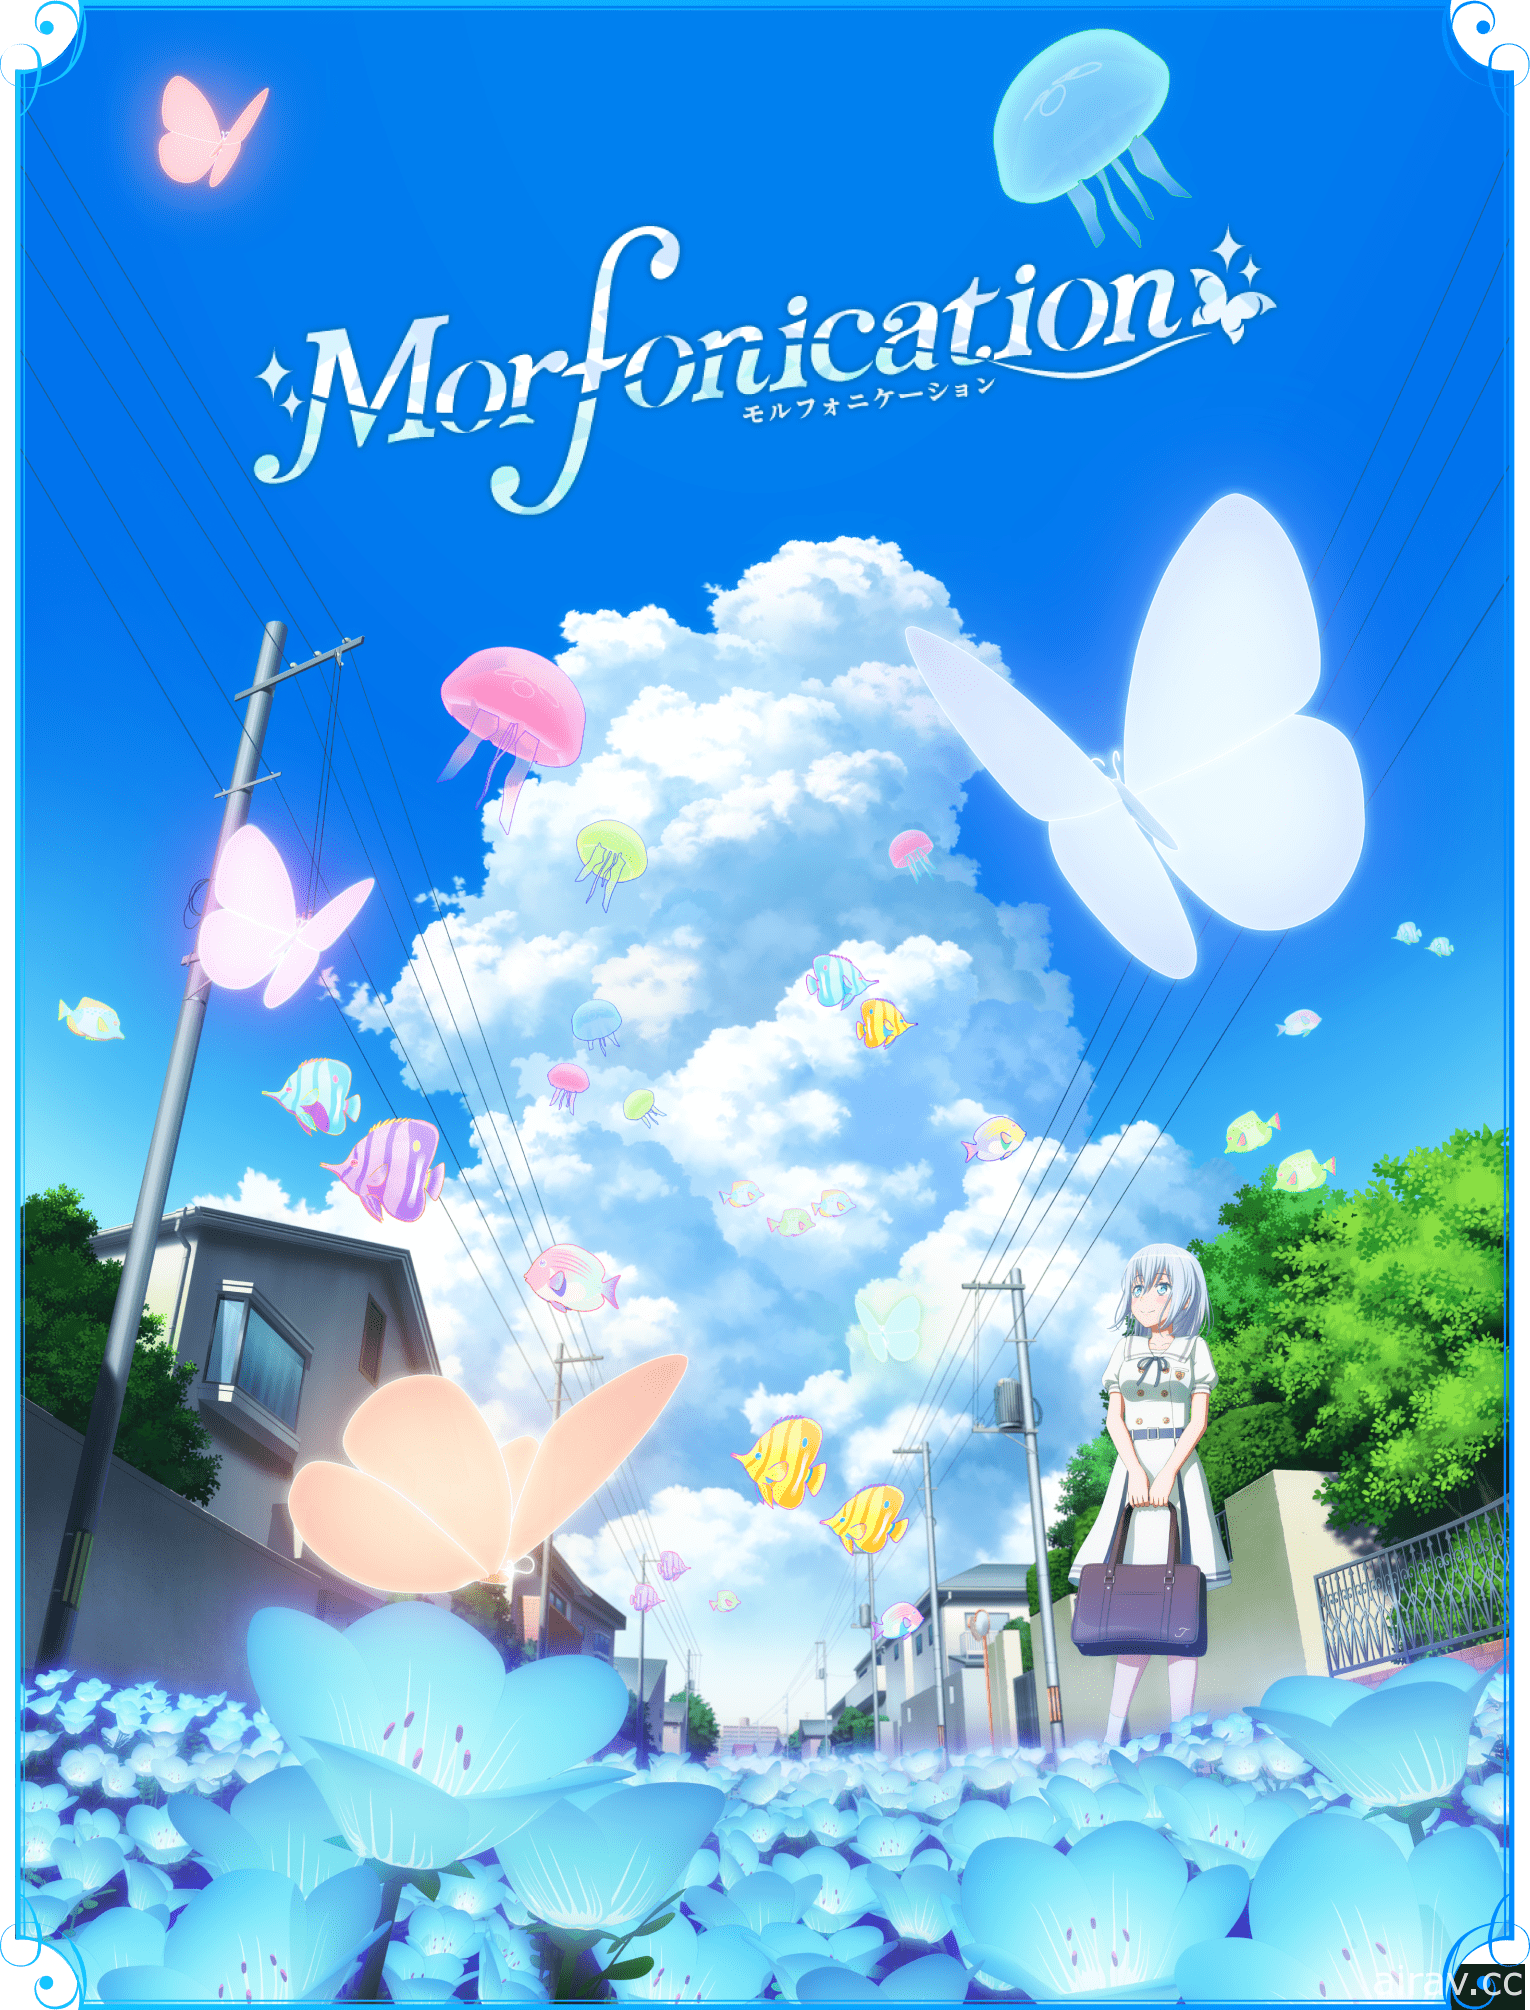 《BanG Dream！Morfonication》釋出前導視覺圖與首波宣傳影像 7 月 28 日開播